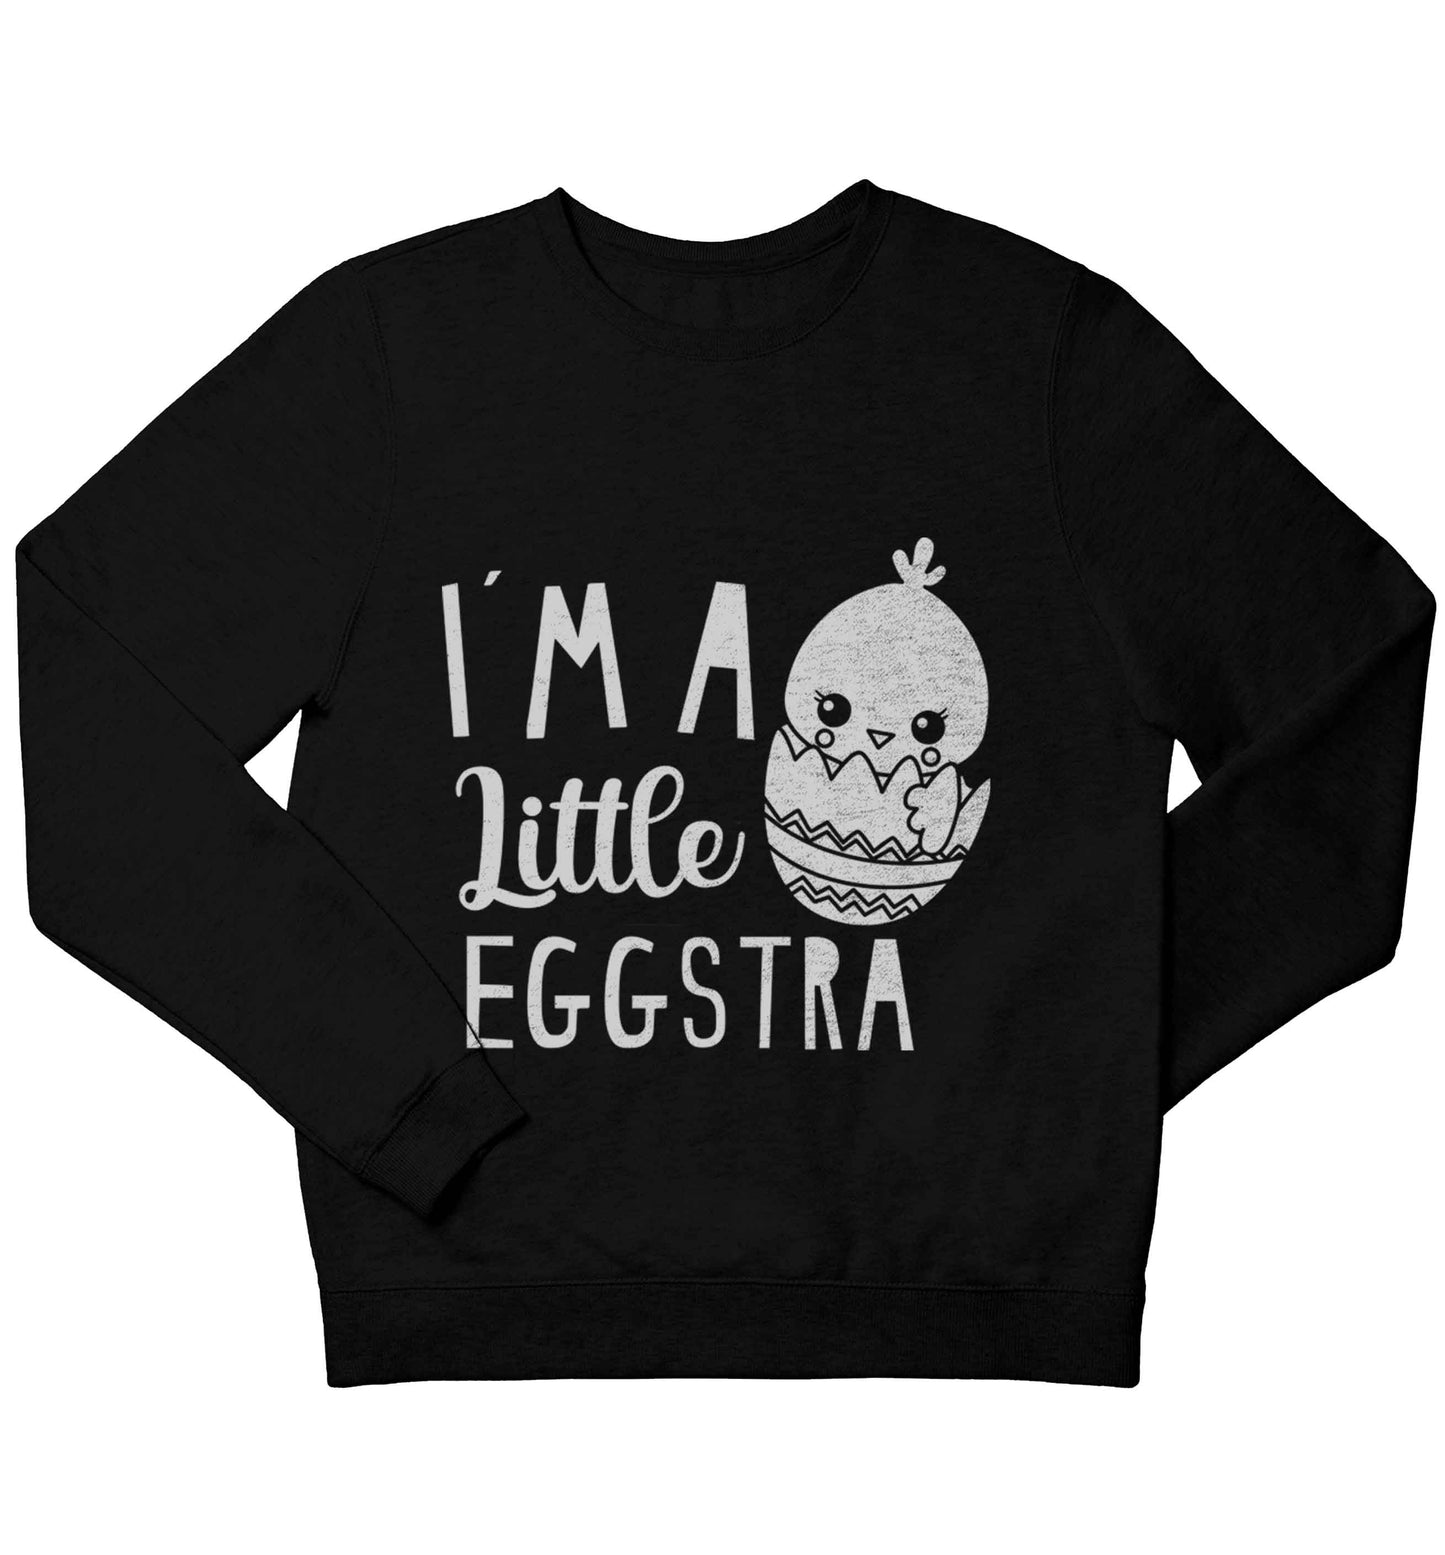 I'm a little eggstra children's black sweater 12-13 Years